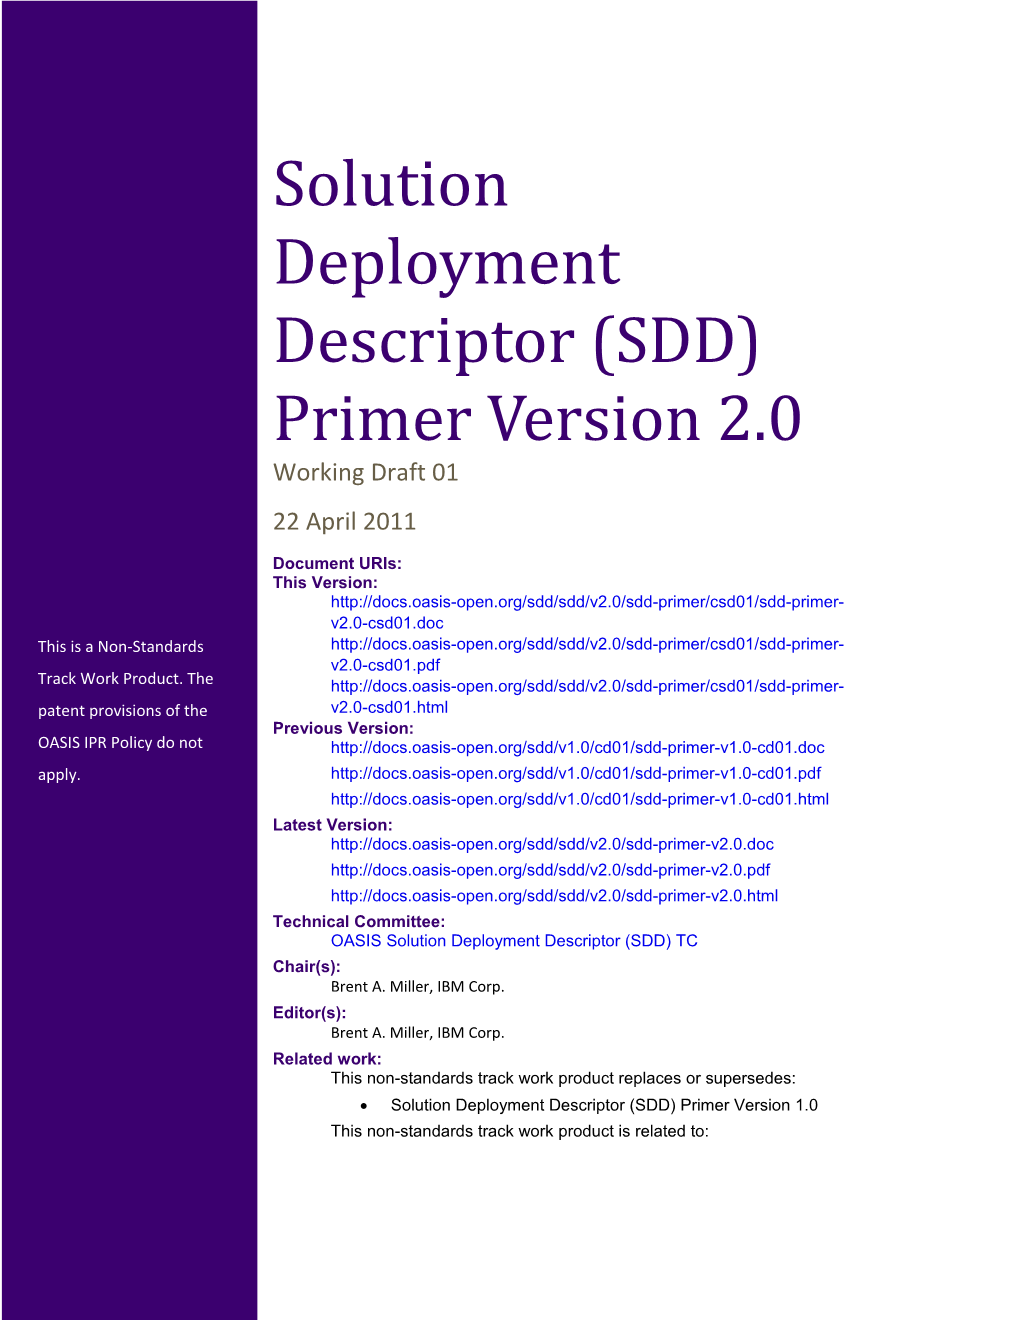 Solution Deployment Descriptor (SDD) Primer Version 1